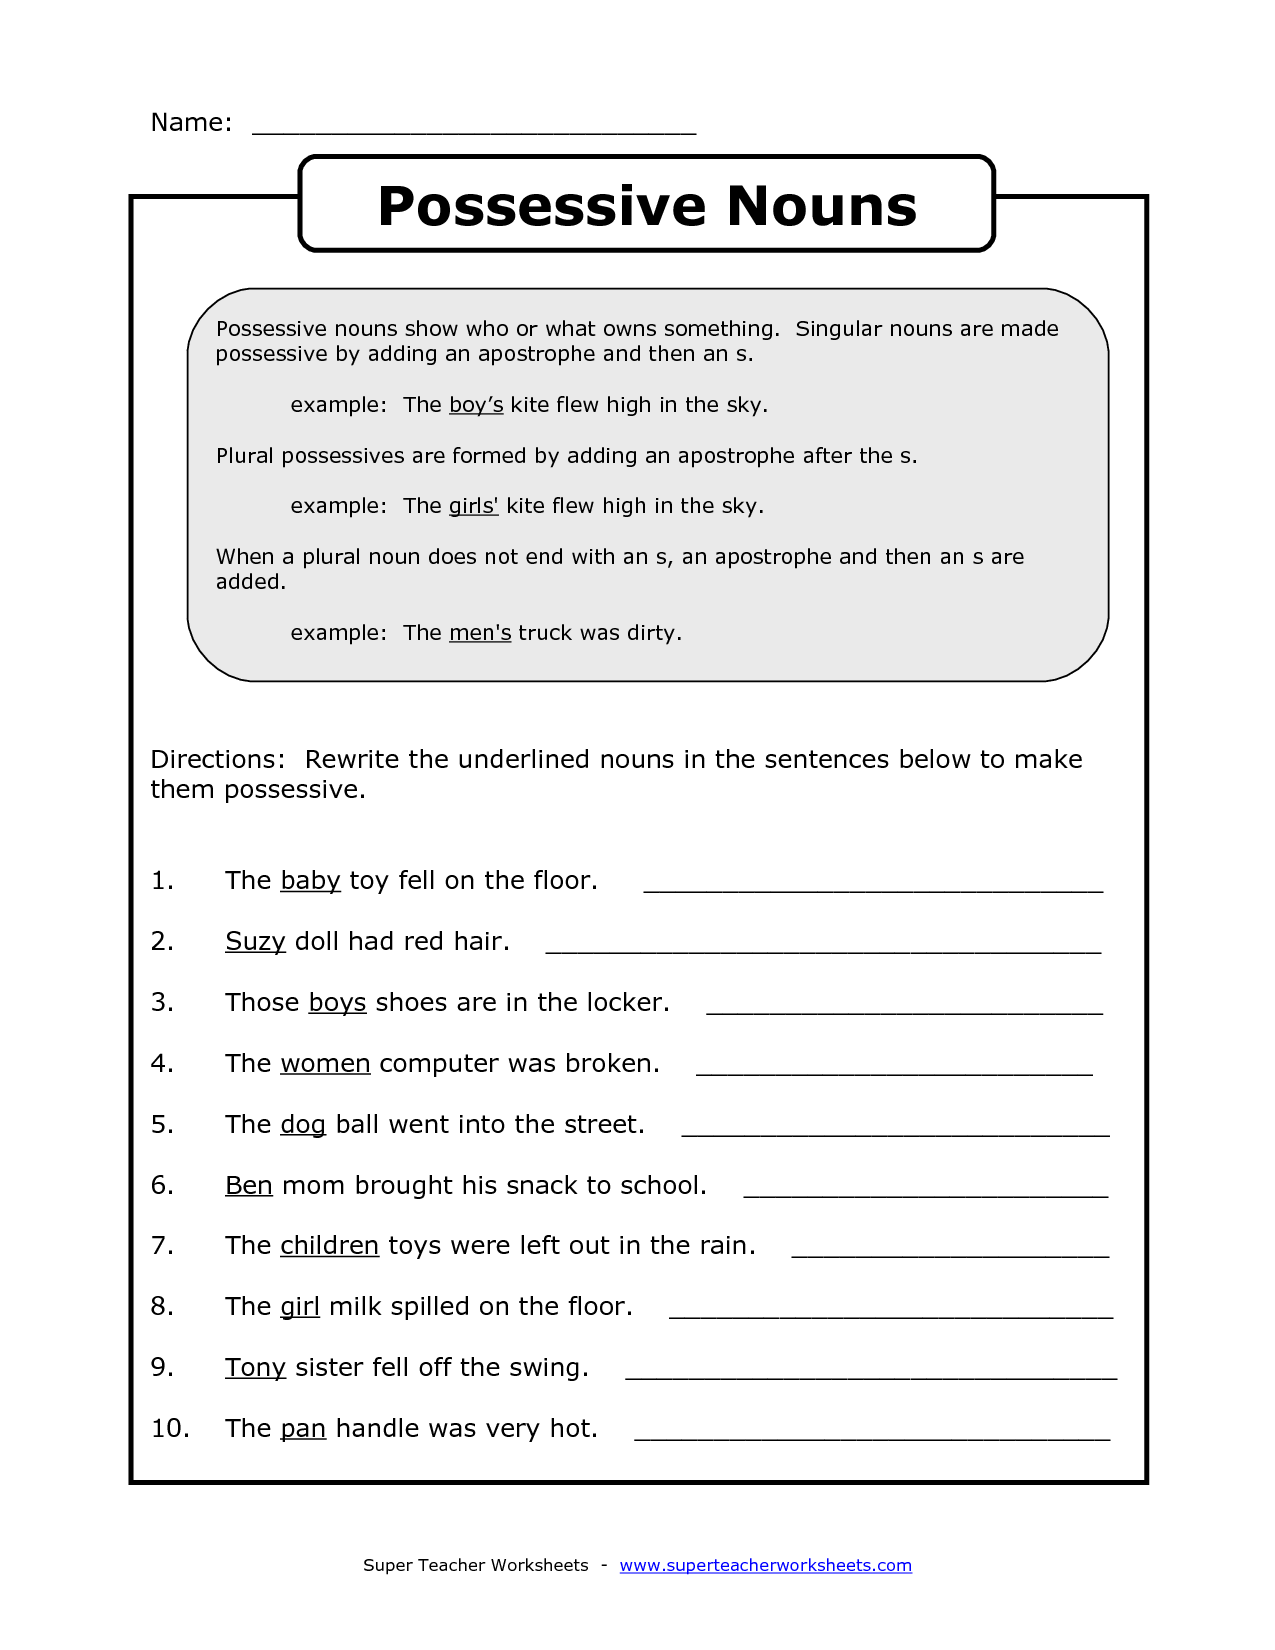 free-printable-possessive-nouns-worksheets-free-printable